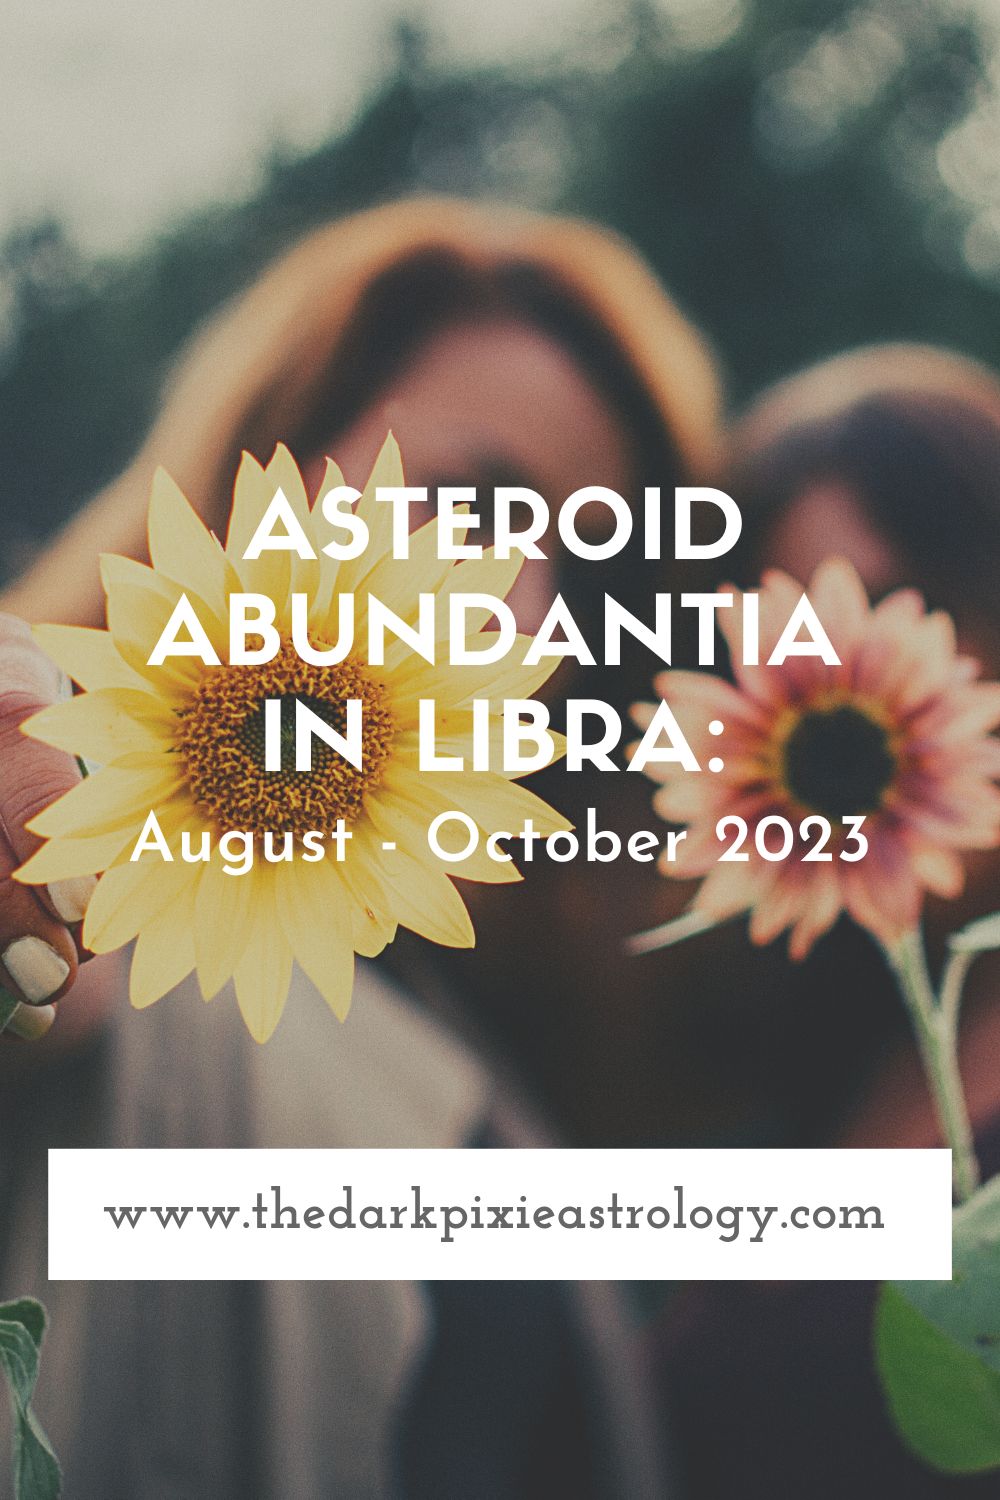 Asteroid Abundantia in Libra: August - October 2023 - The Dark Pixie Astrology